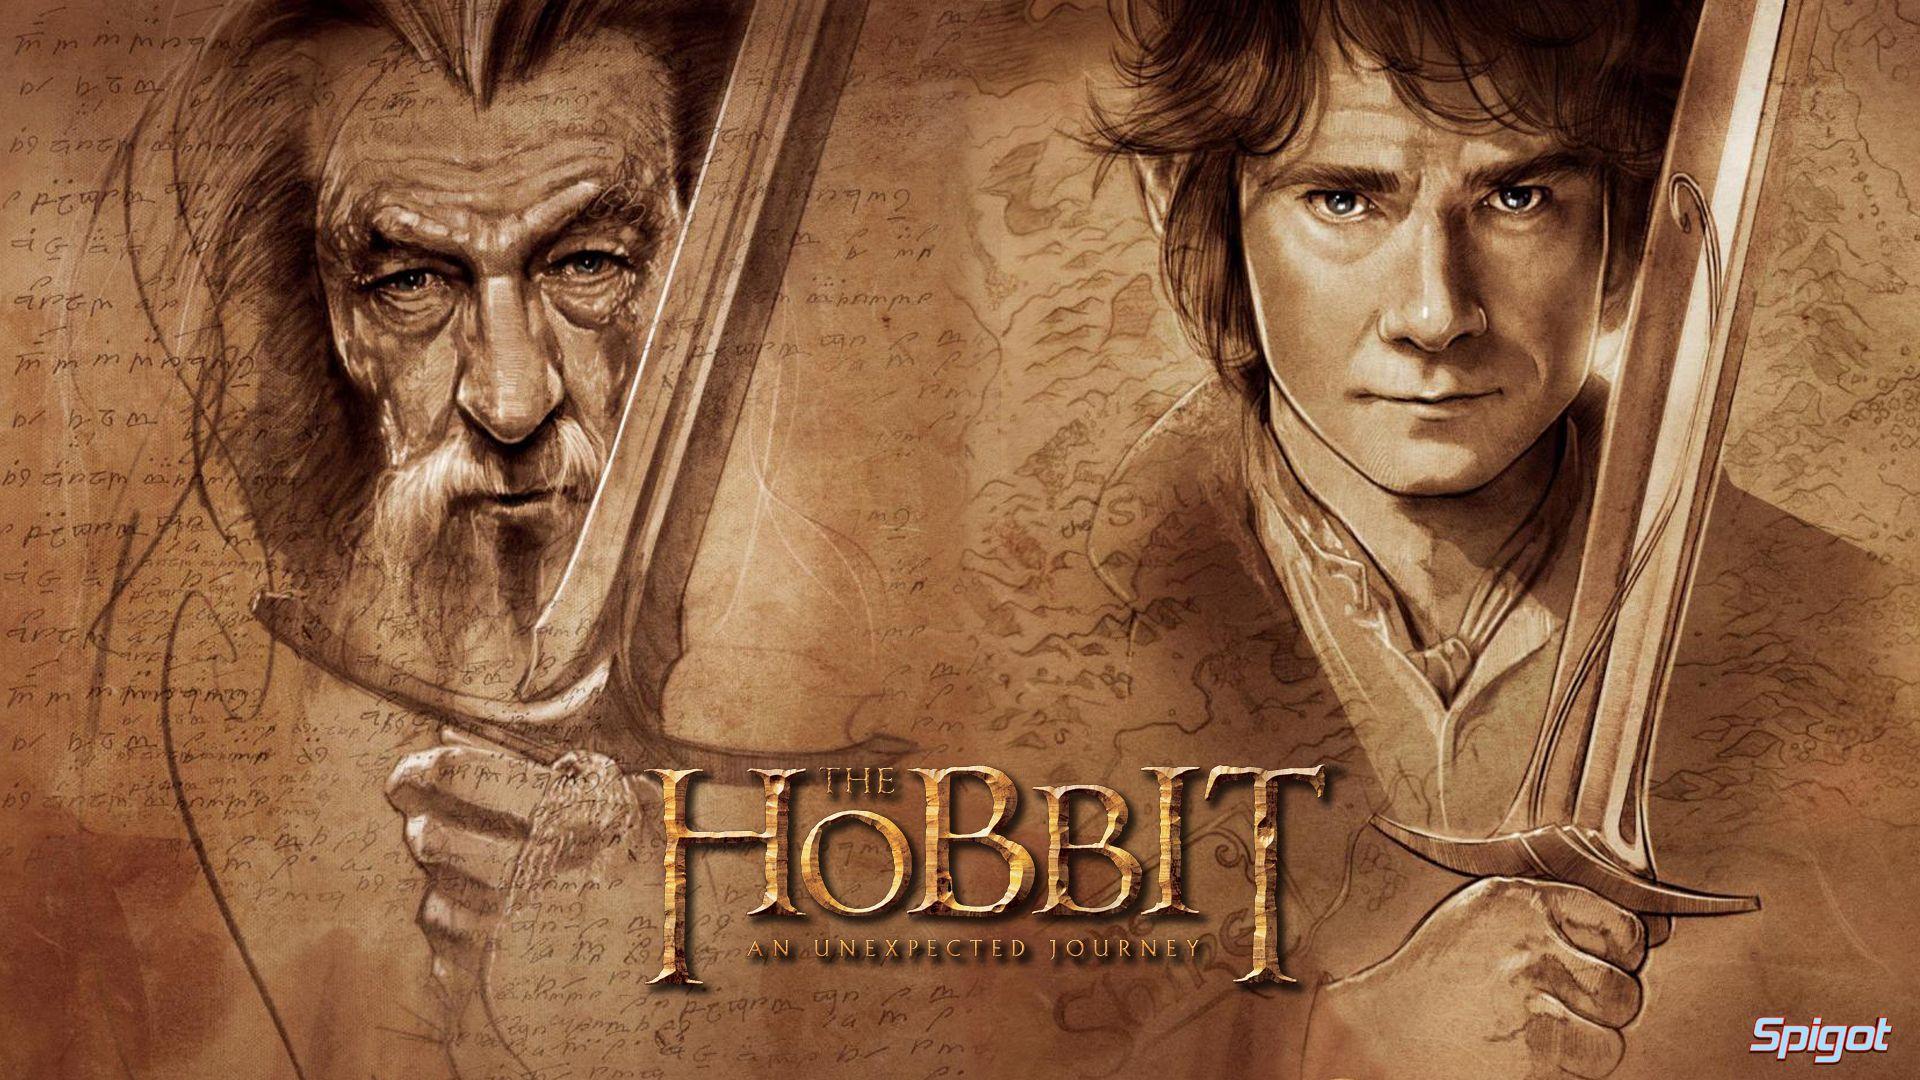 Bilbo Baggins. George Spigot's Blog